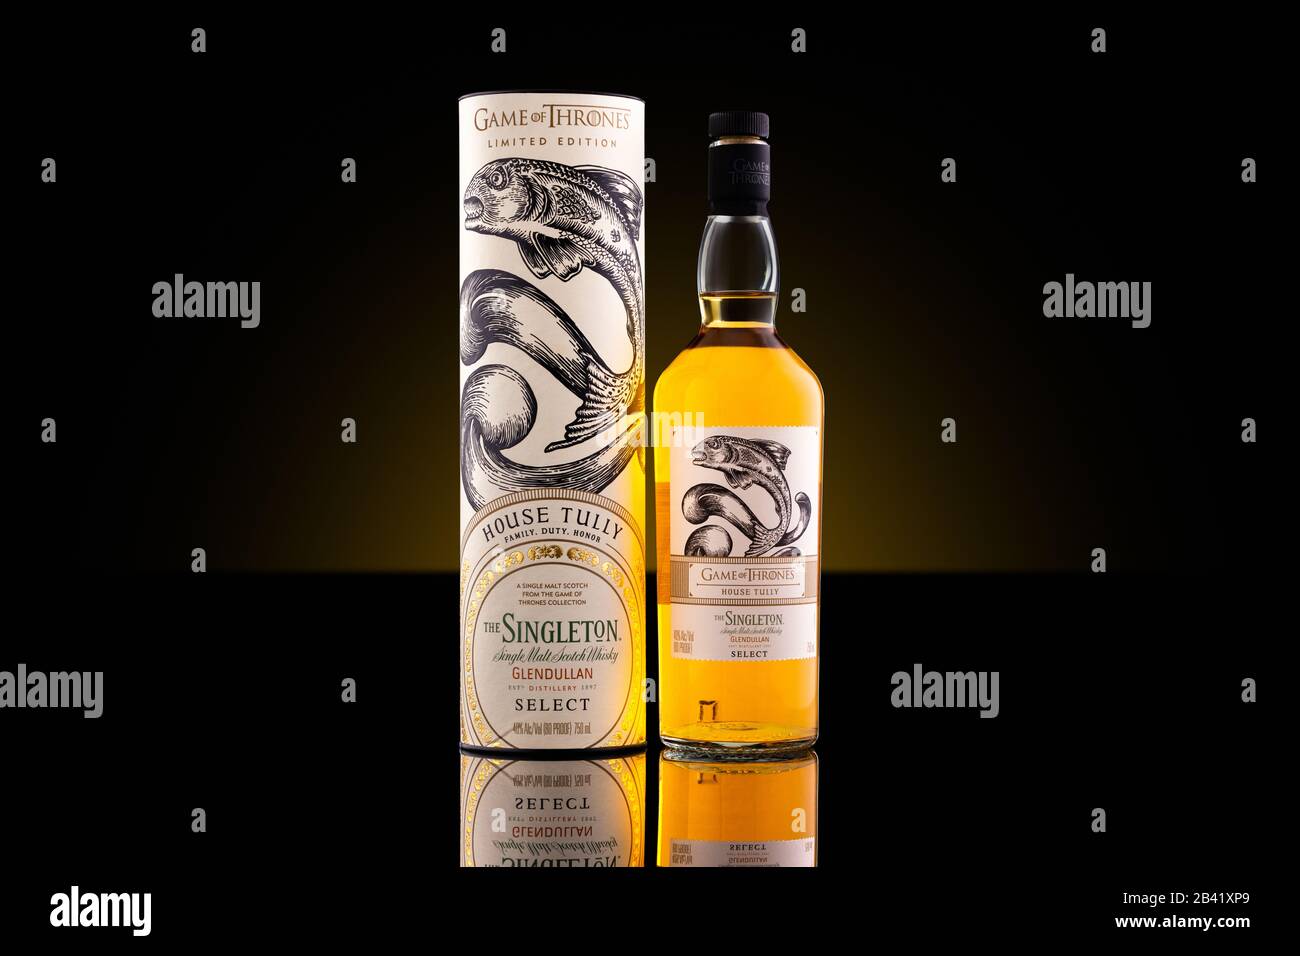 Bottle and box of The Singleton GoT edition, single malt whisky Stock Photo